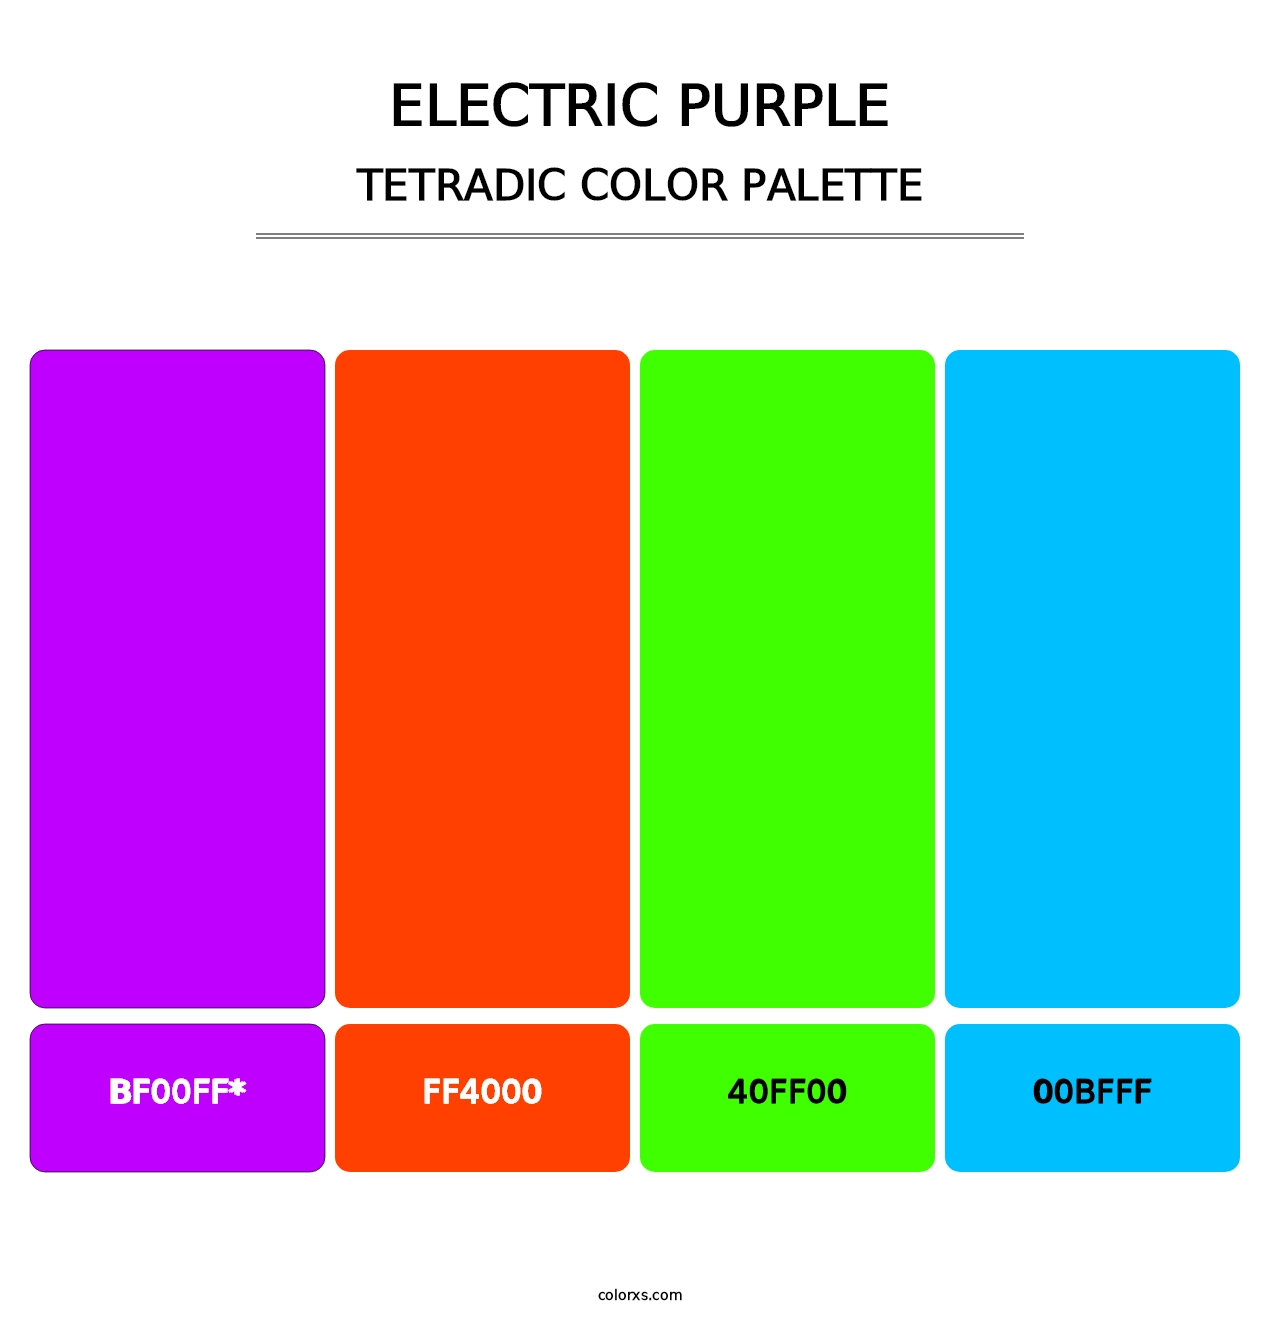 Electric Purple - Tetradic Color Palette